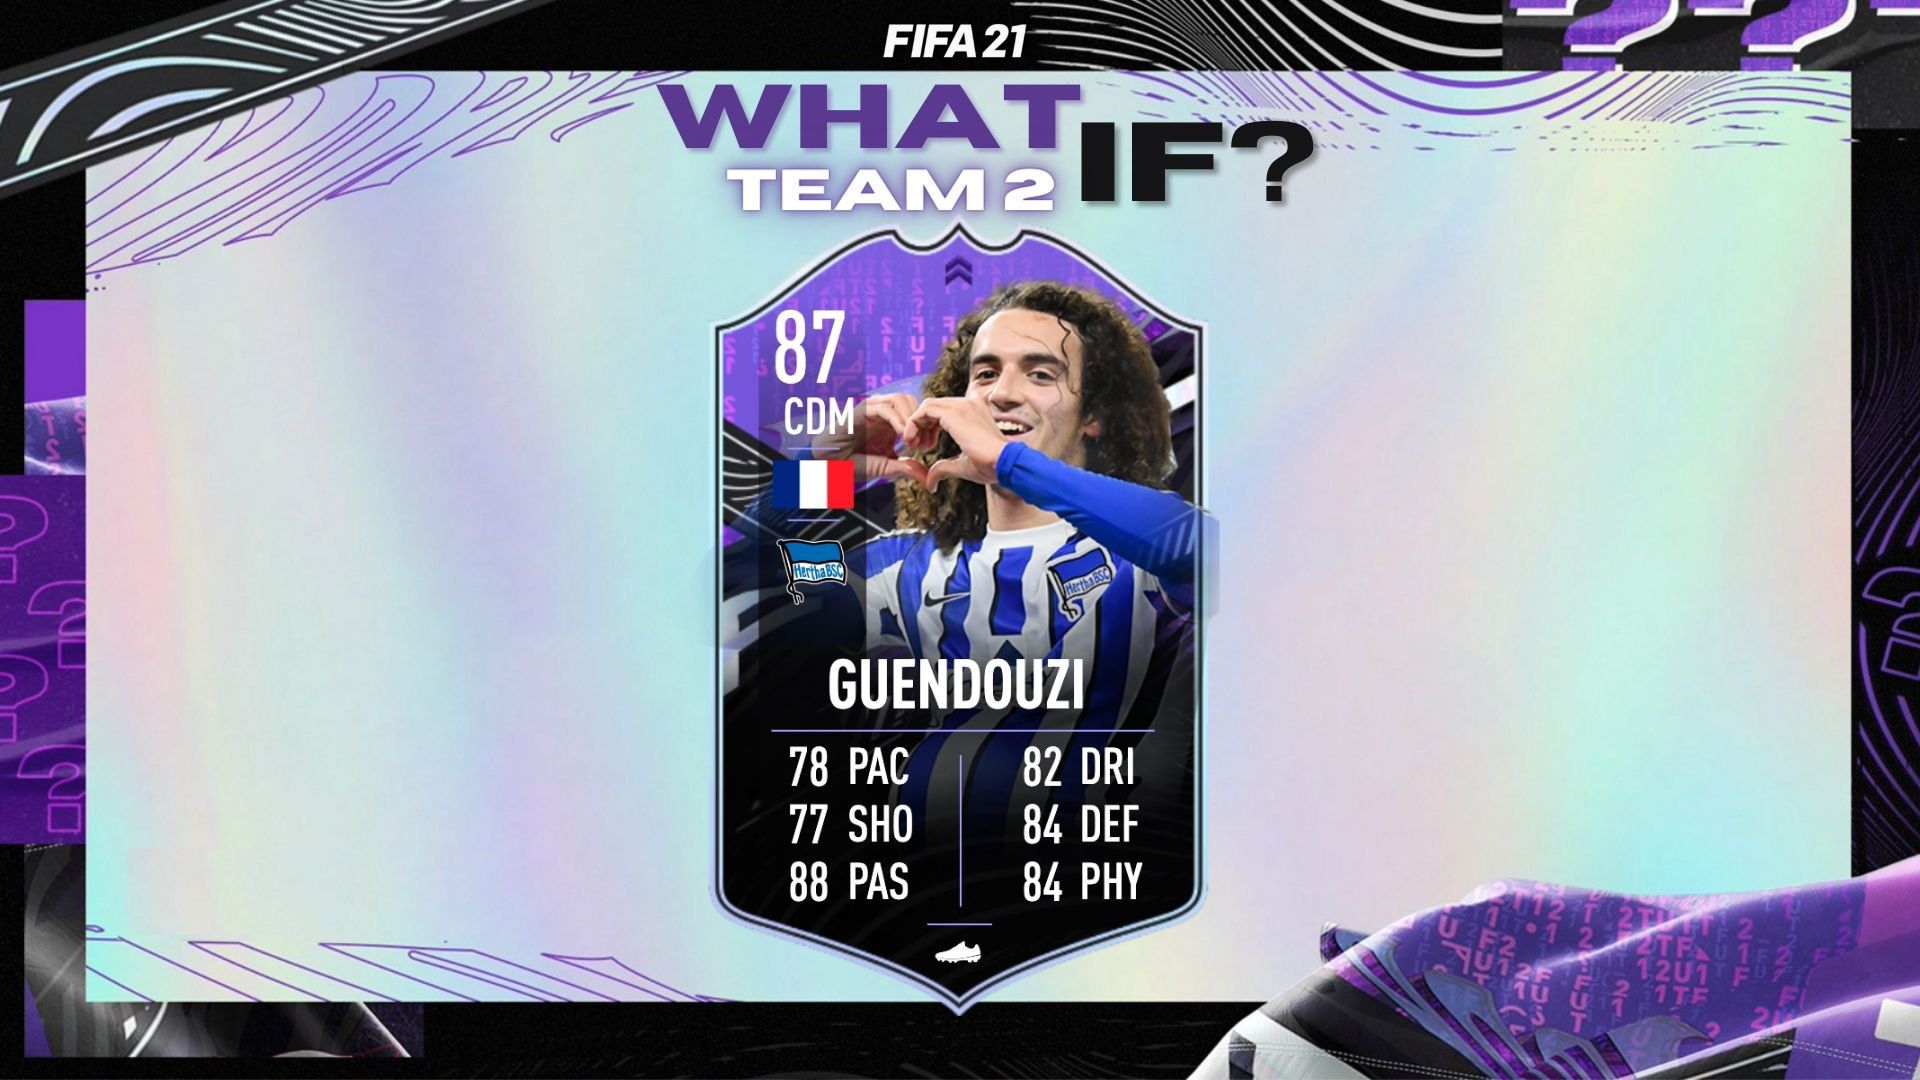 Matteo Guendouzi FIFA 21 What If